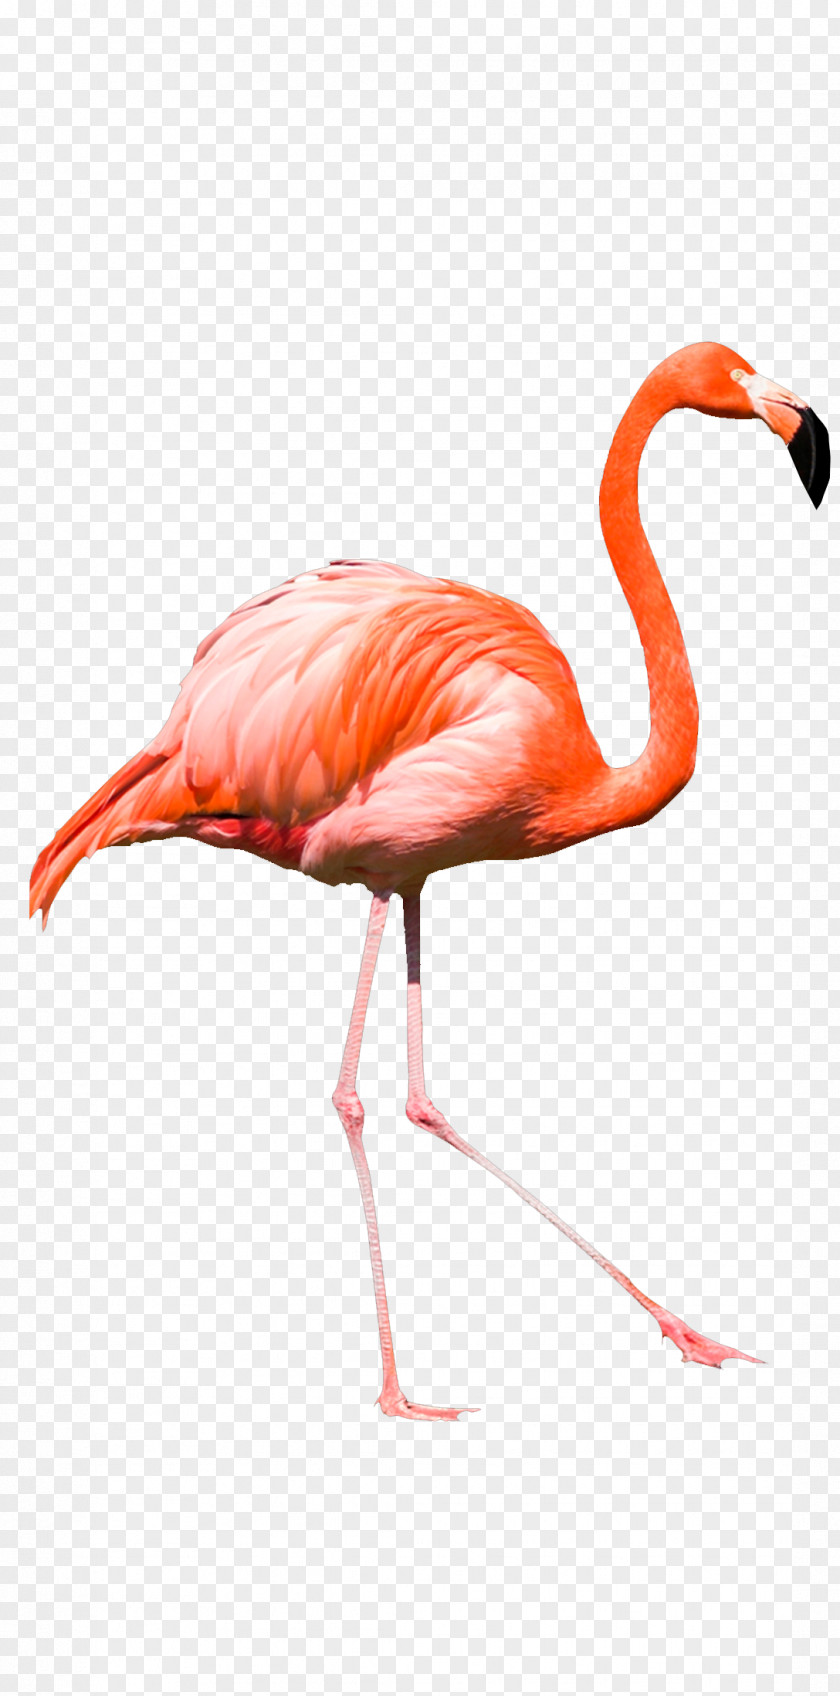 Flamingo Clip Art Illustration Image PNG